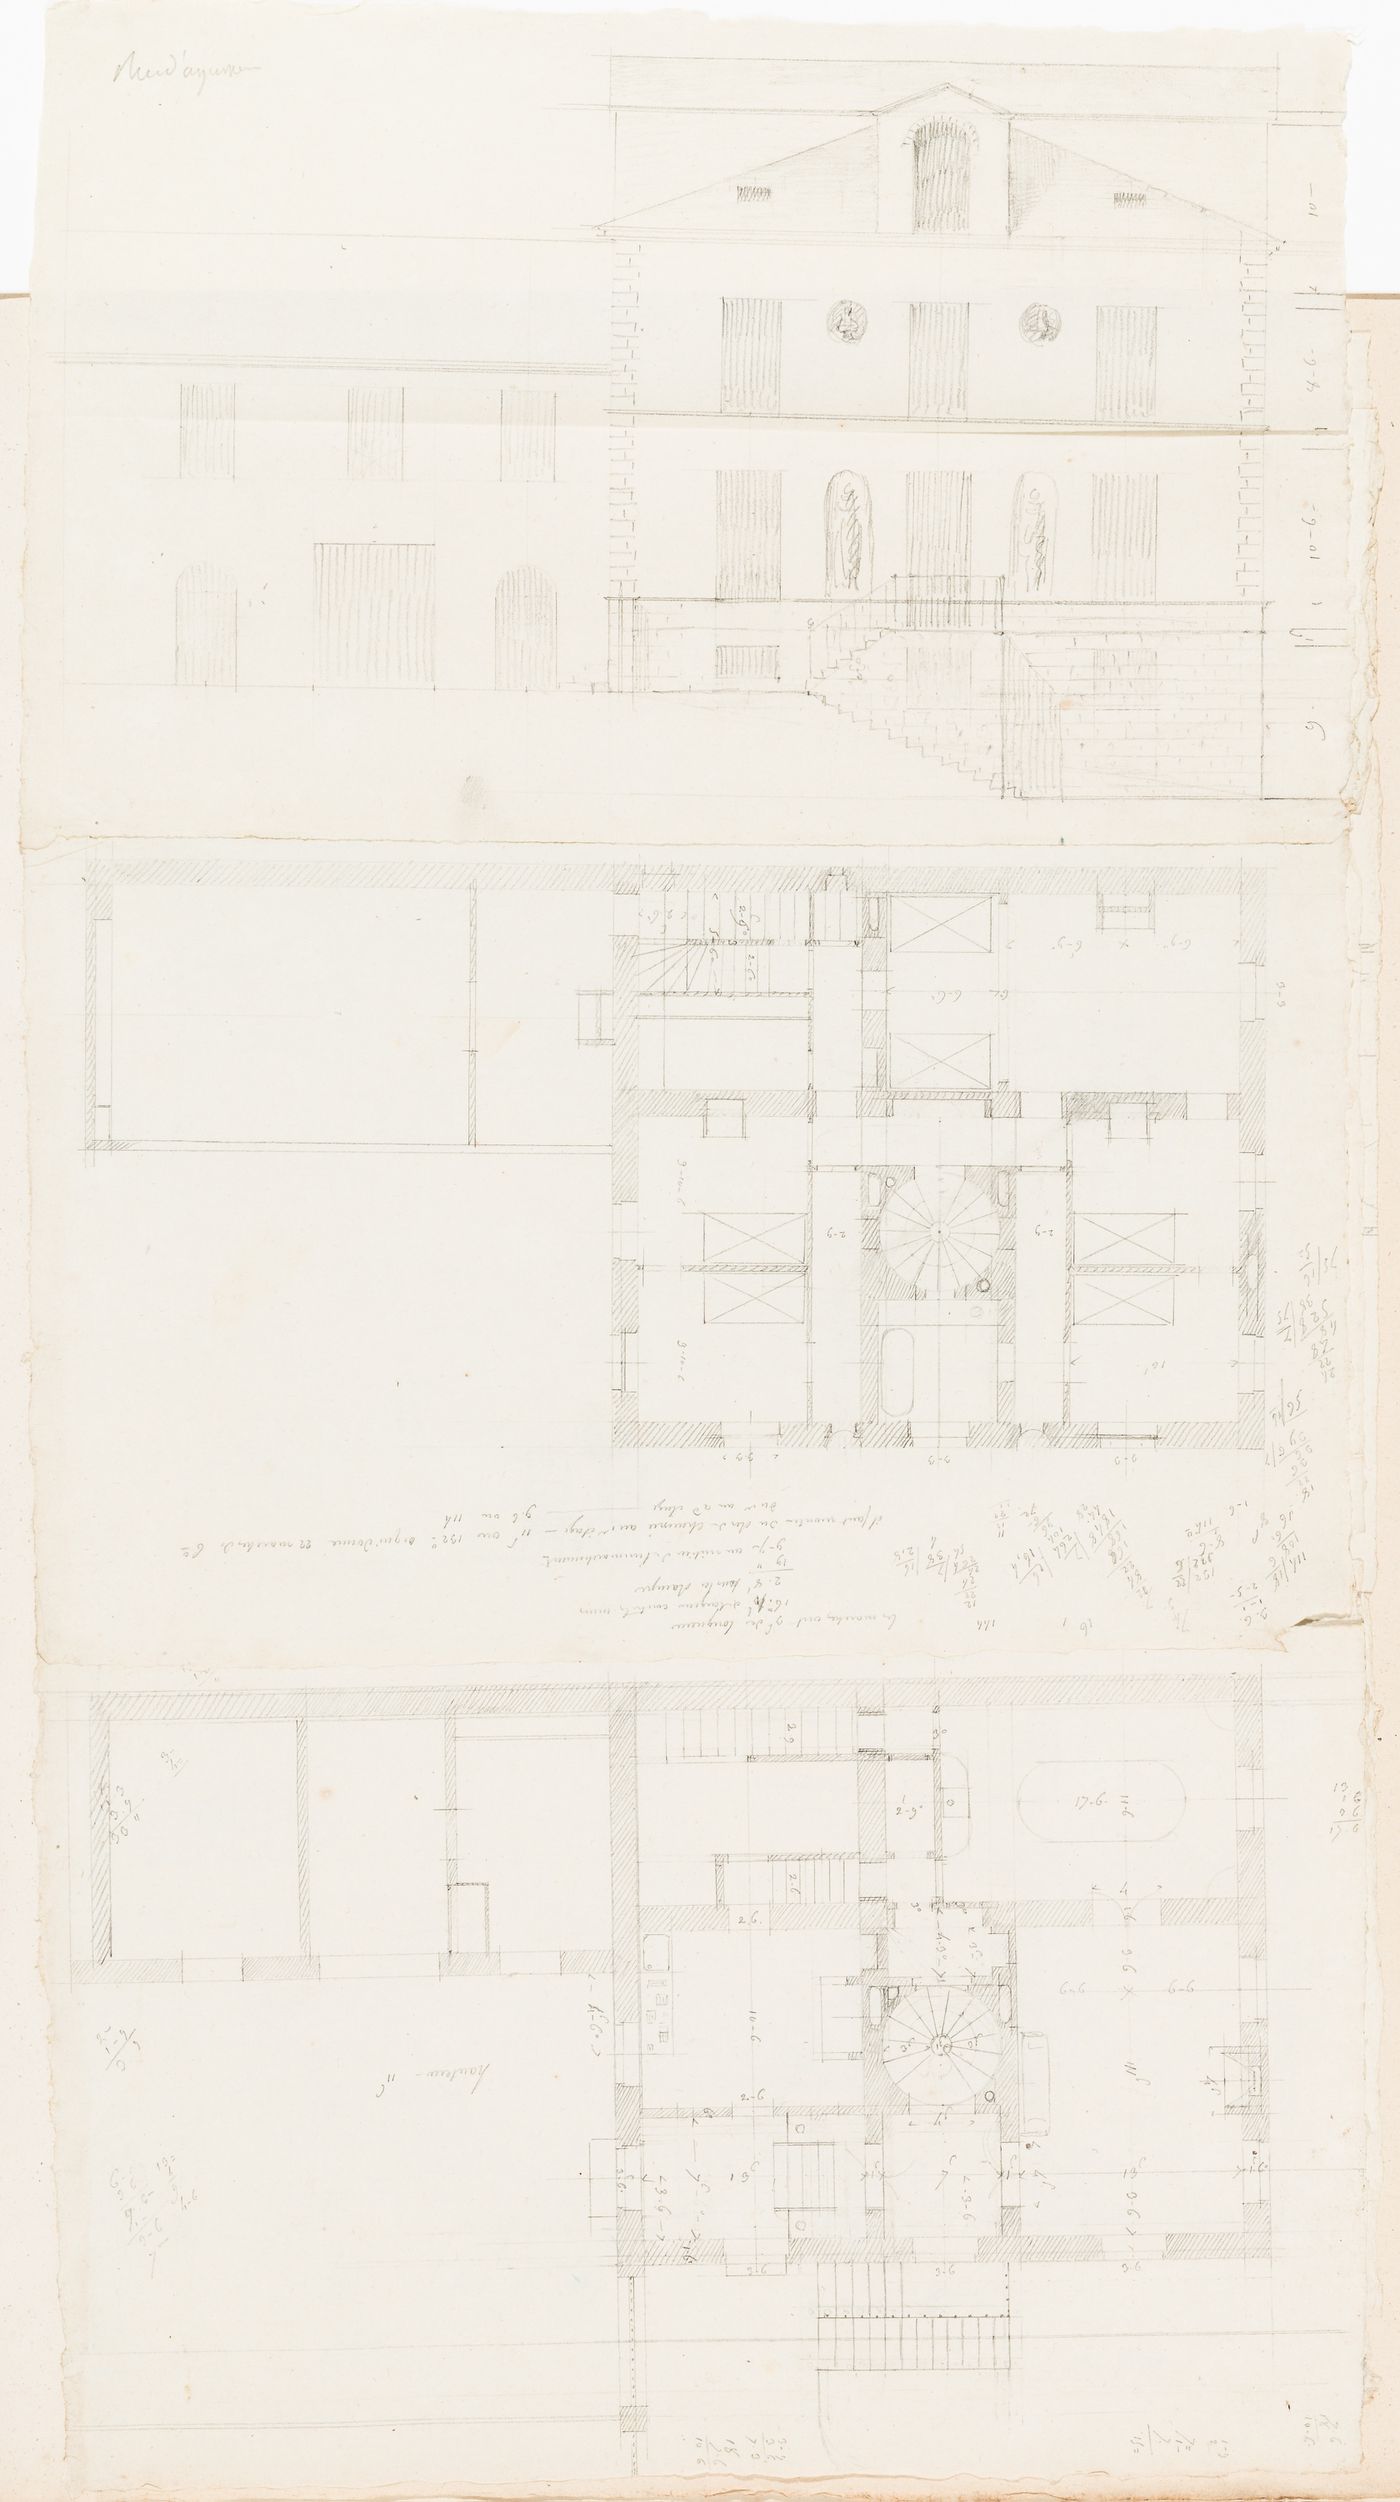 Rohault de Fleury House, 12-14 rue d'Aguesseau, Paris: First floor plan; verso: Sketch plan, probably for Rohault de Fleury House, 12-14 rue d'Aguesseau, Paris